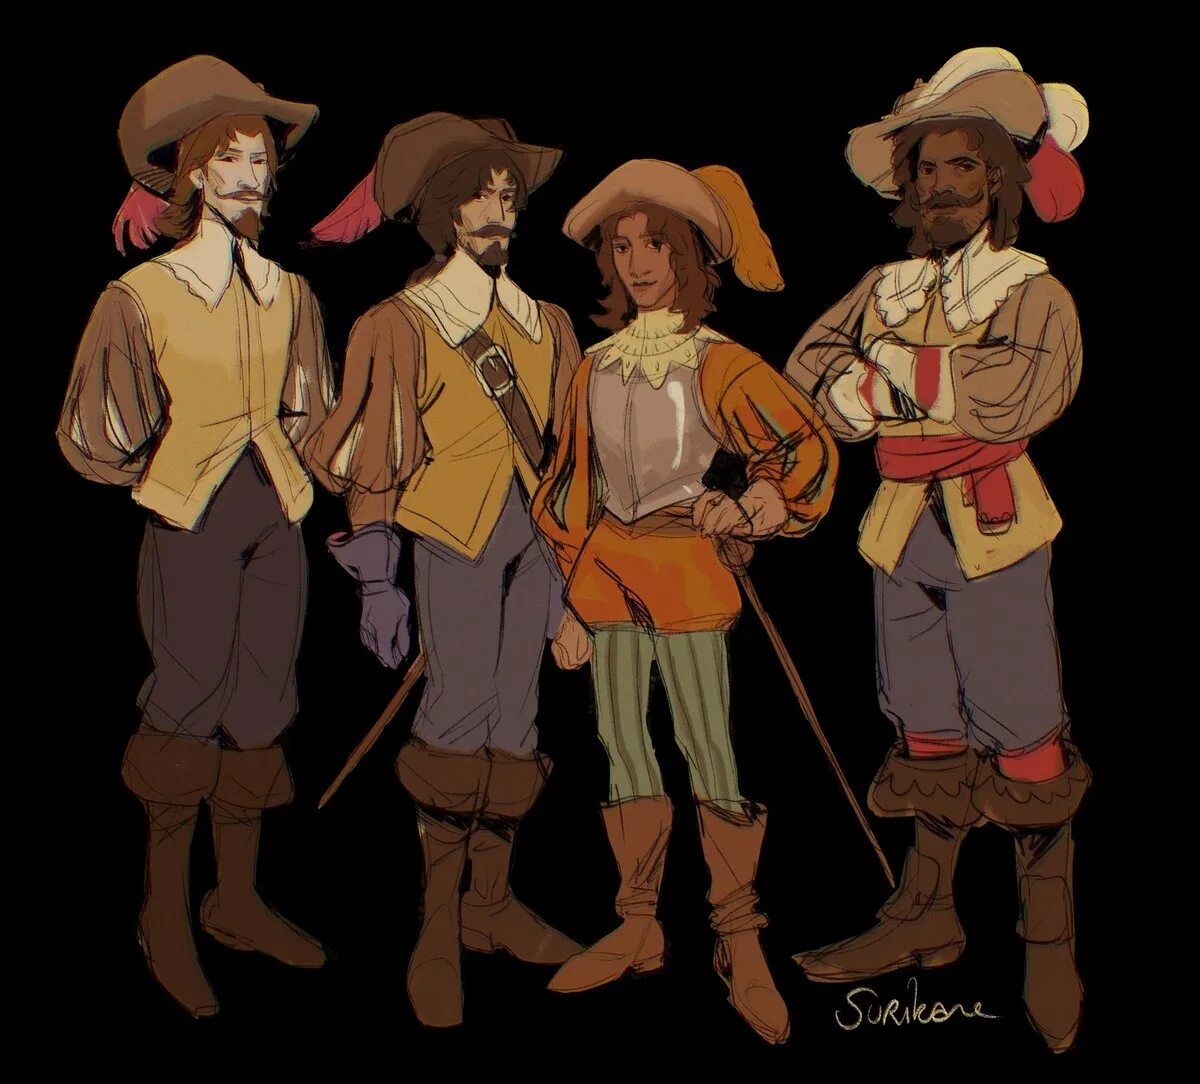 Три мушкетера. Атос три мушкетера 2021. Дюма мушкетеры.